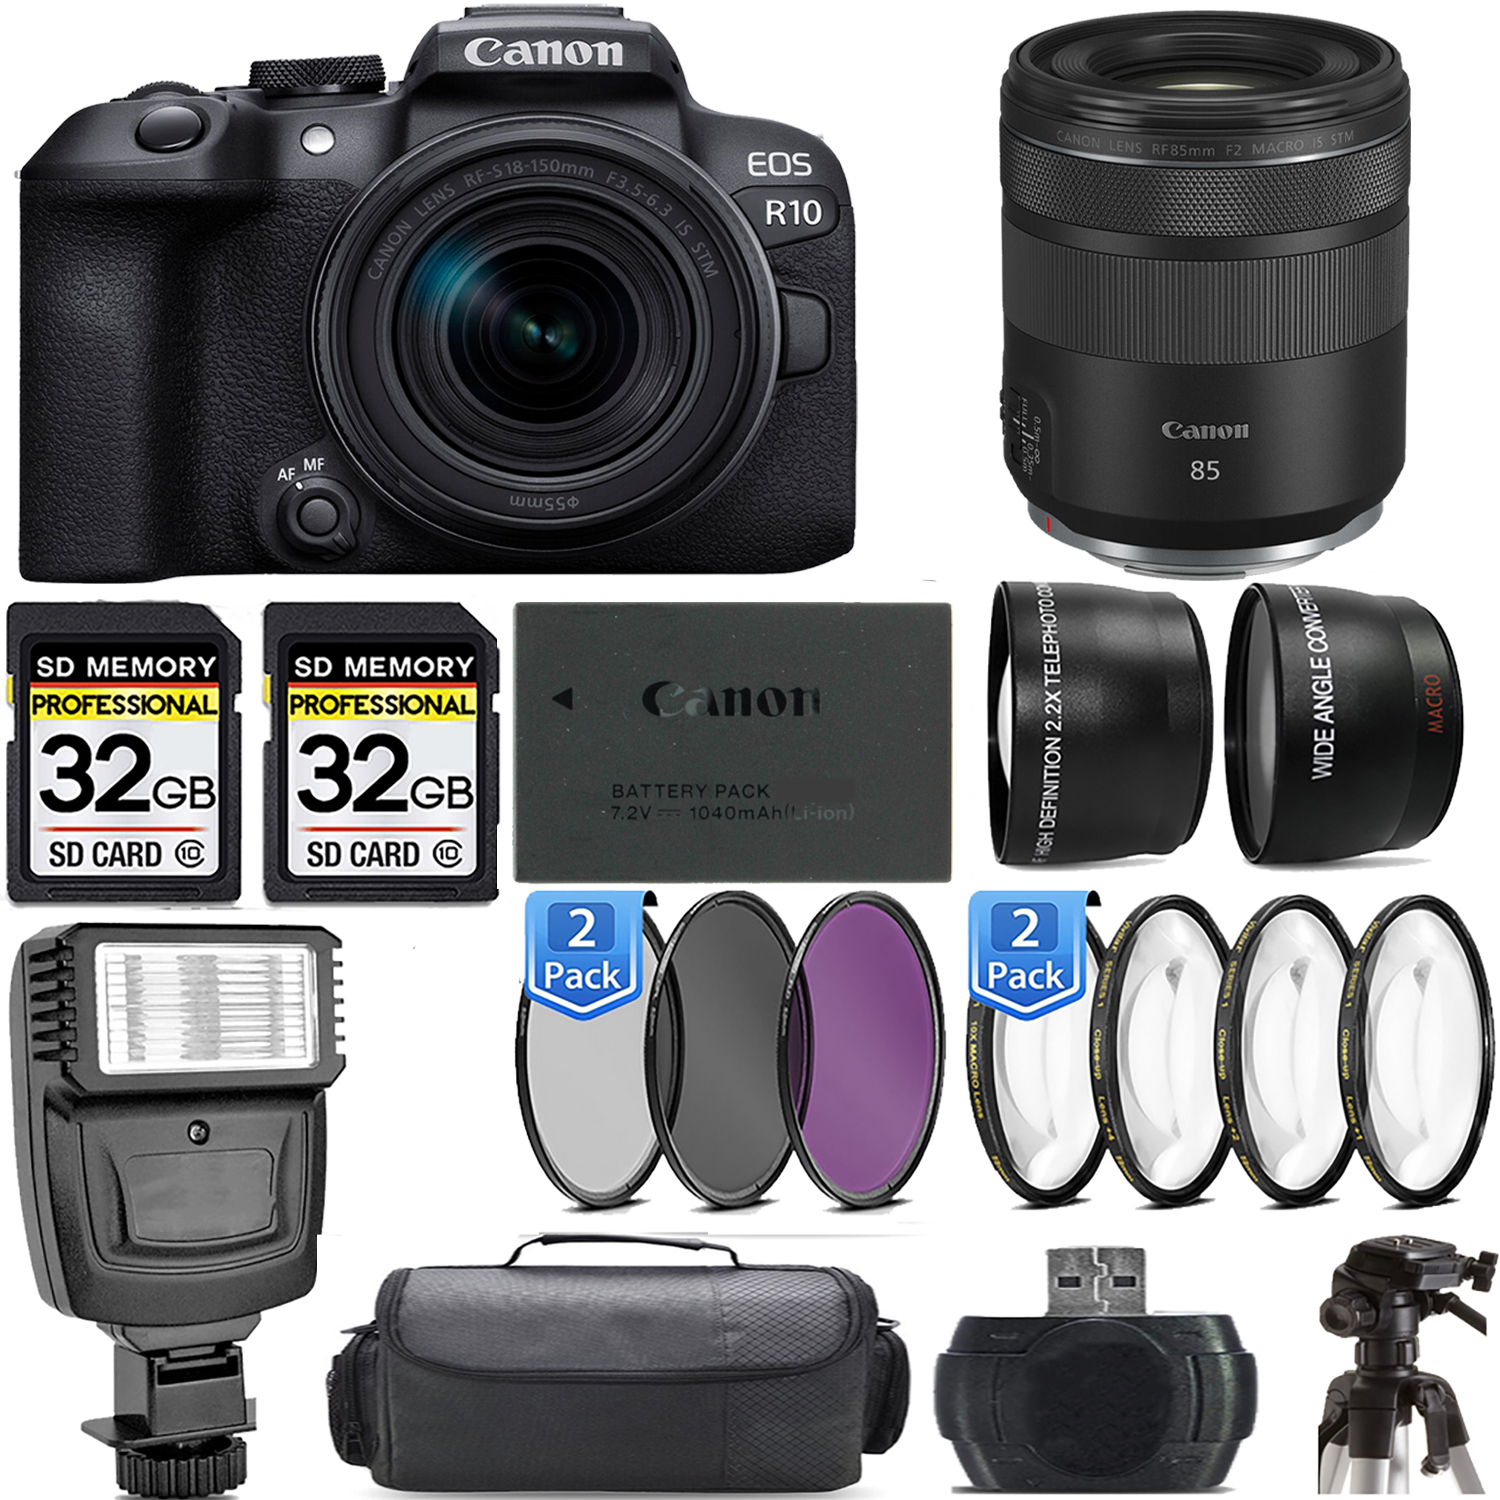 EOS R10 Camera + 18-150mm Lens + 85mm f/2 Macro IS STM Lens + Flash - Kit *FREE SHIPPING*